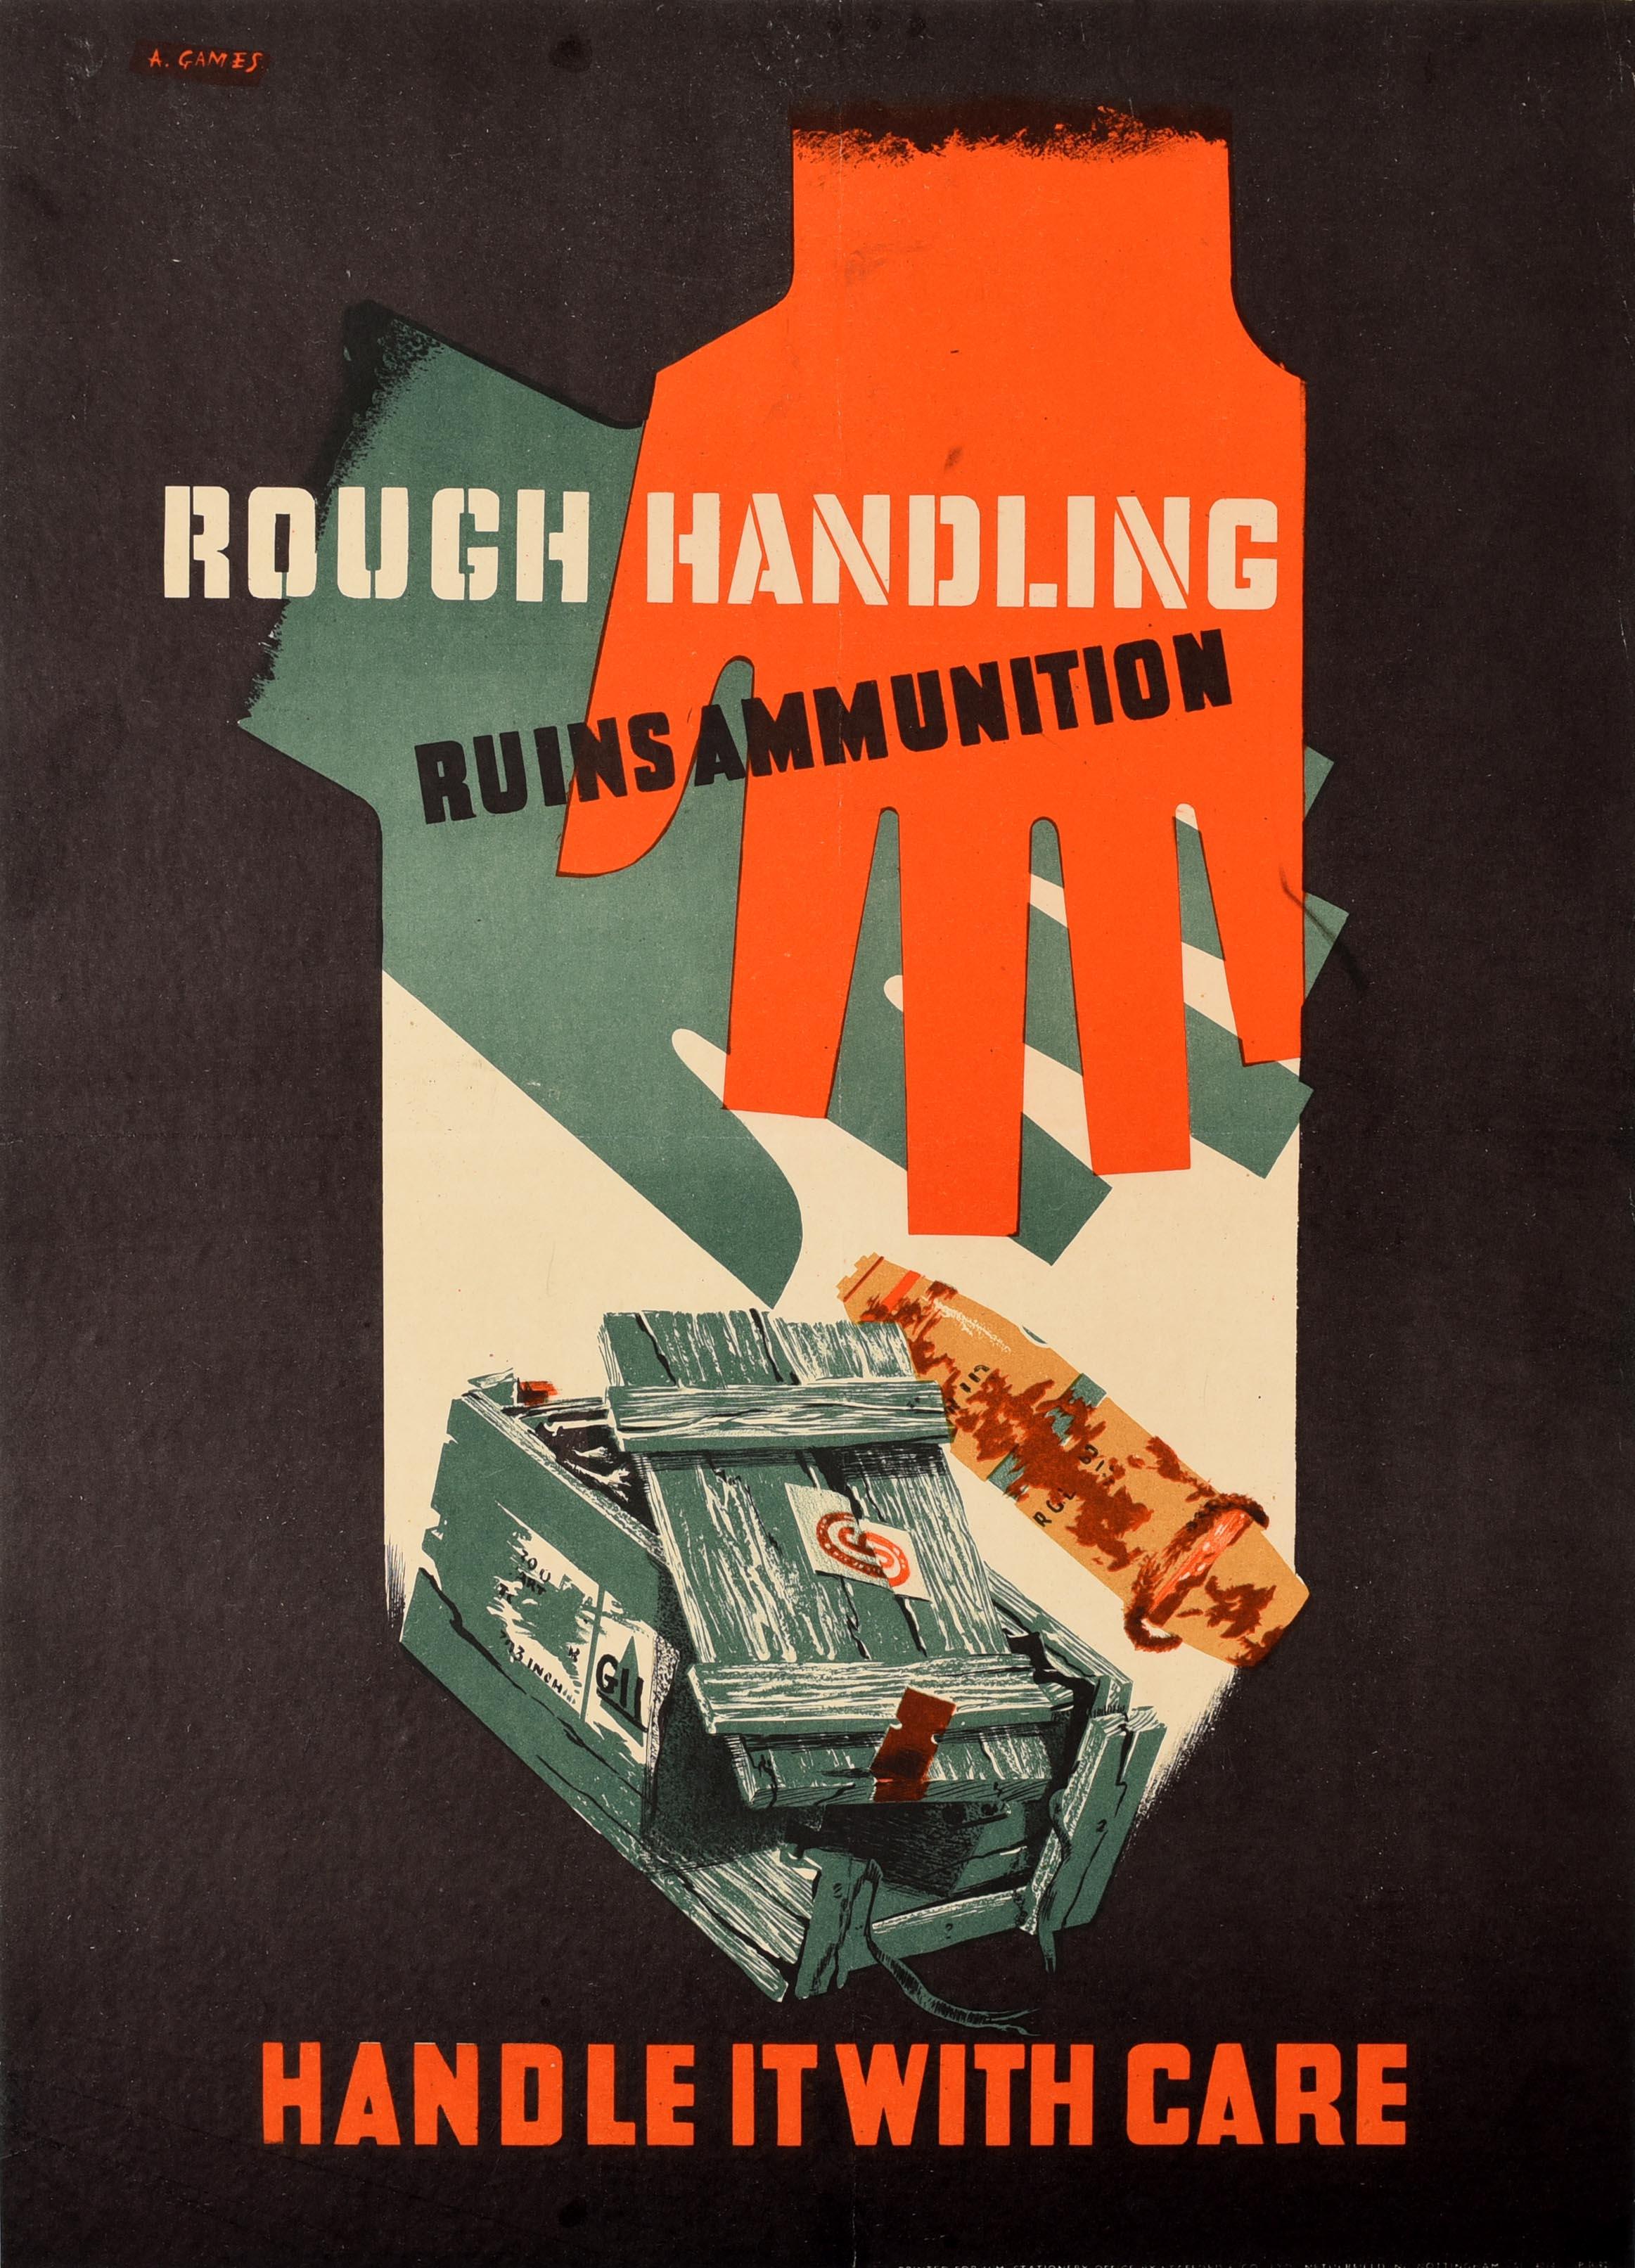 Abram Games Print - Original Vintage WWII Poster Rough Handling Ruins Ammunition Safety Care Warning